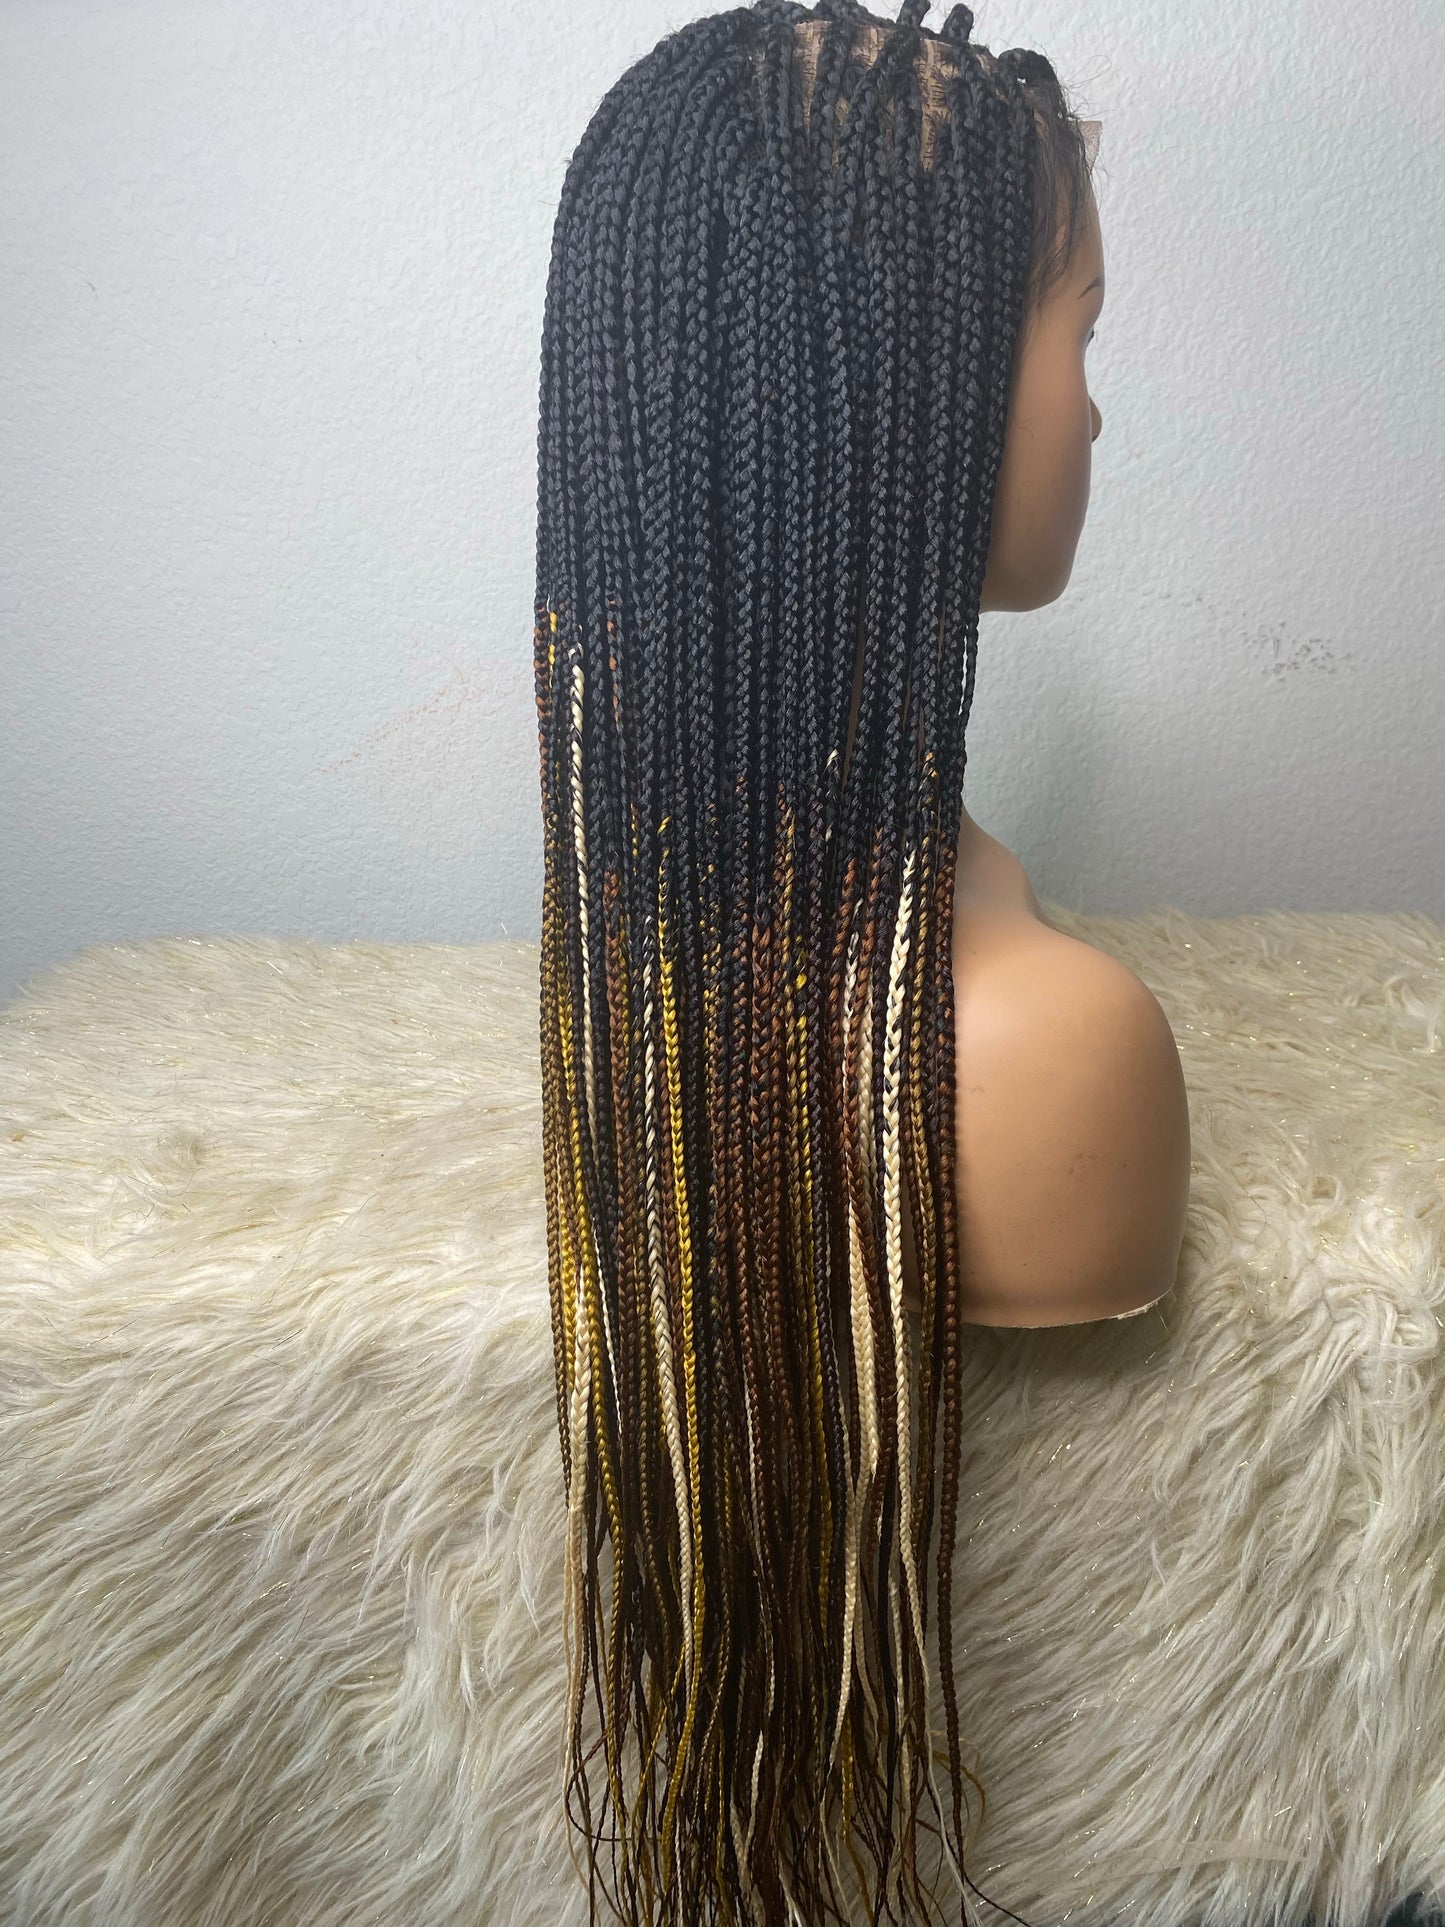 Summer box braids - sheshopperhairplace LLC